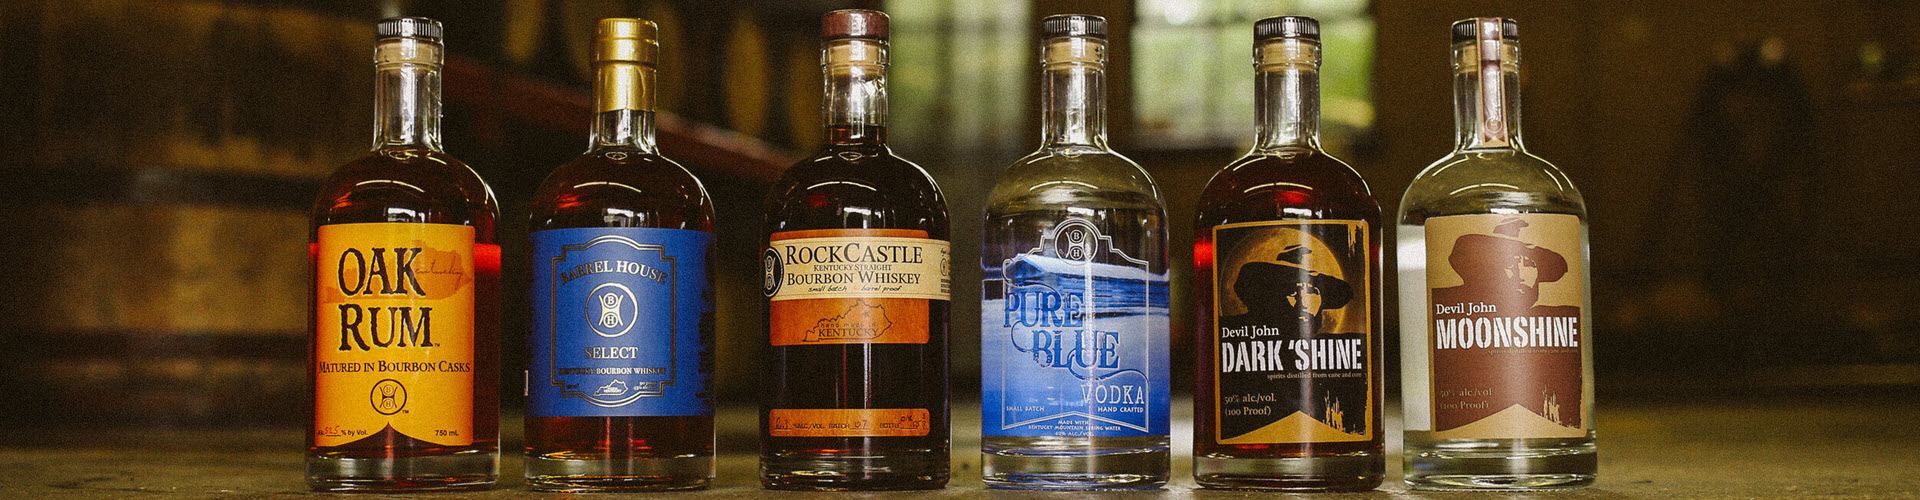 Barrel House Distilling Co. - Rum, Bourbon Select, RockCastle Bourbon, Pure Blue Vodka, Devil John Dark Shine, and Devil John Moonshine Bottles